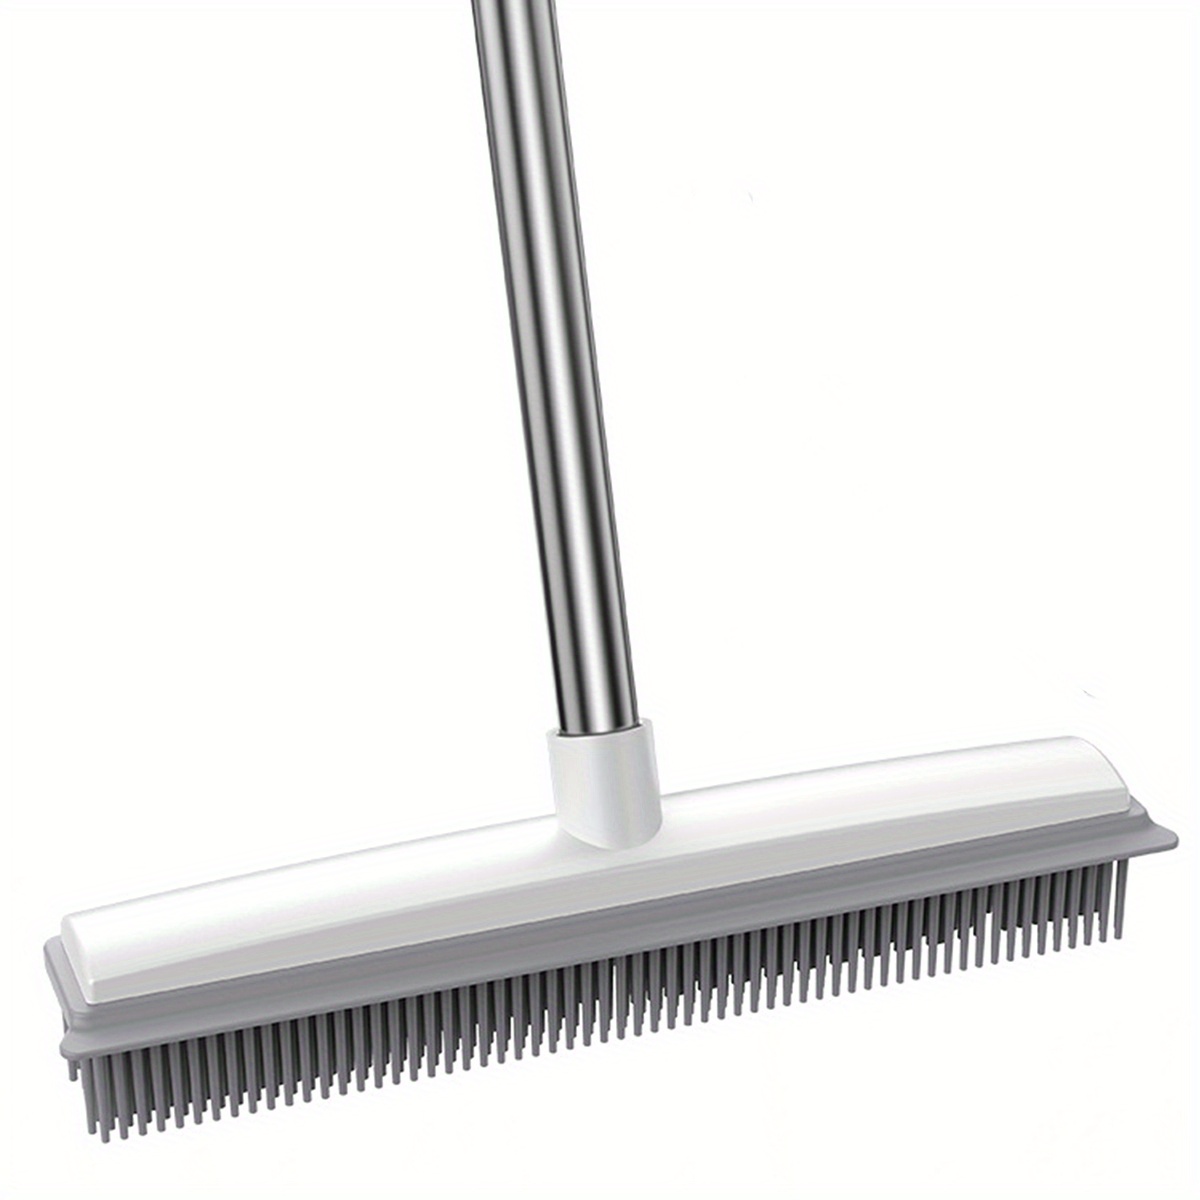 ALL IN ONE! Rubber Broom - Heavy Duty Floor Squeegees, Sweeps & Scrubs  w/Telescoping handle